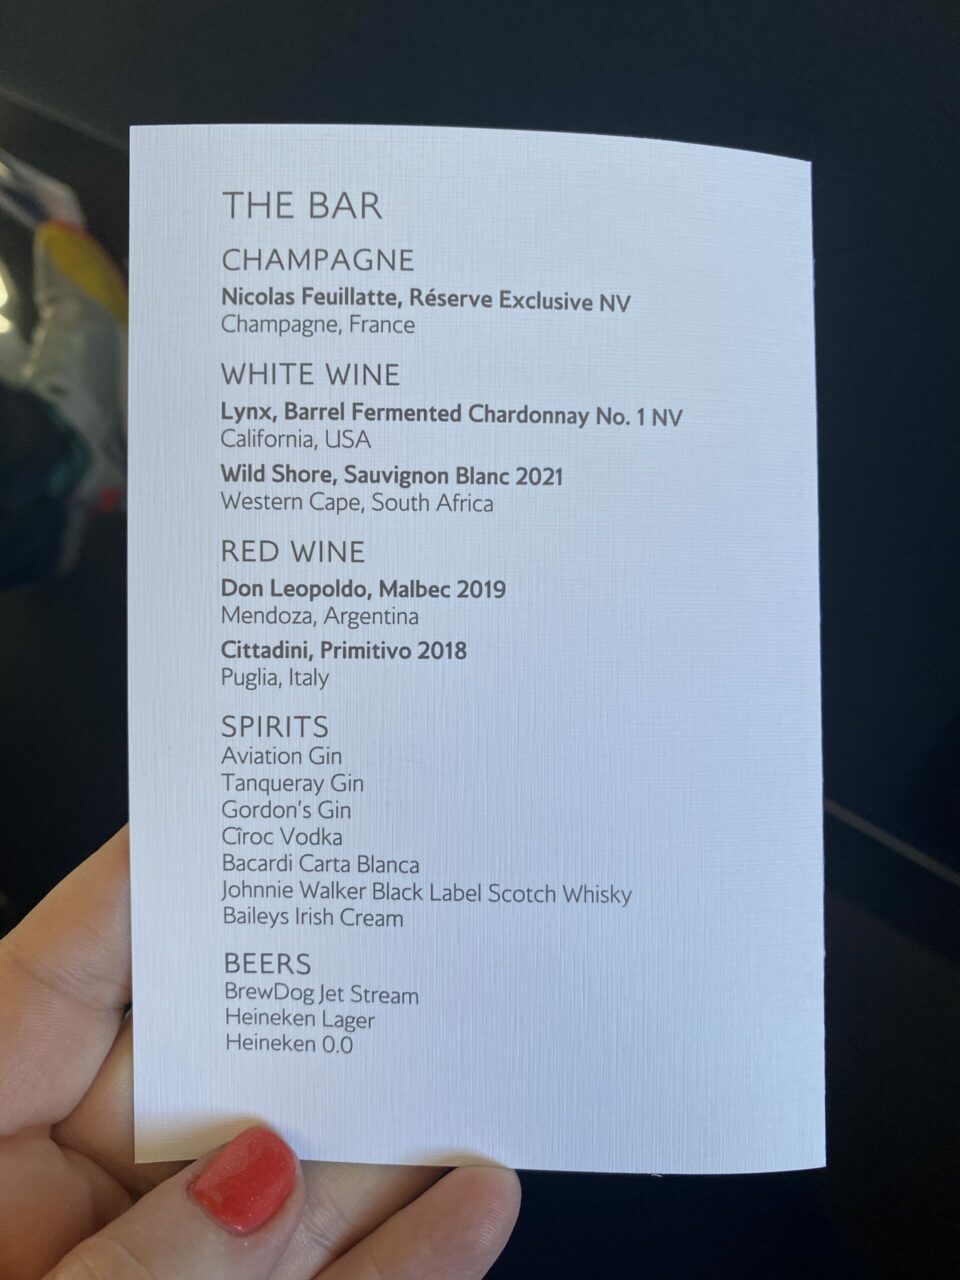 British Airways Club Europe meals in 2022 The Bar Menu 